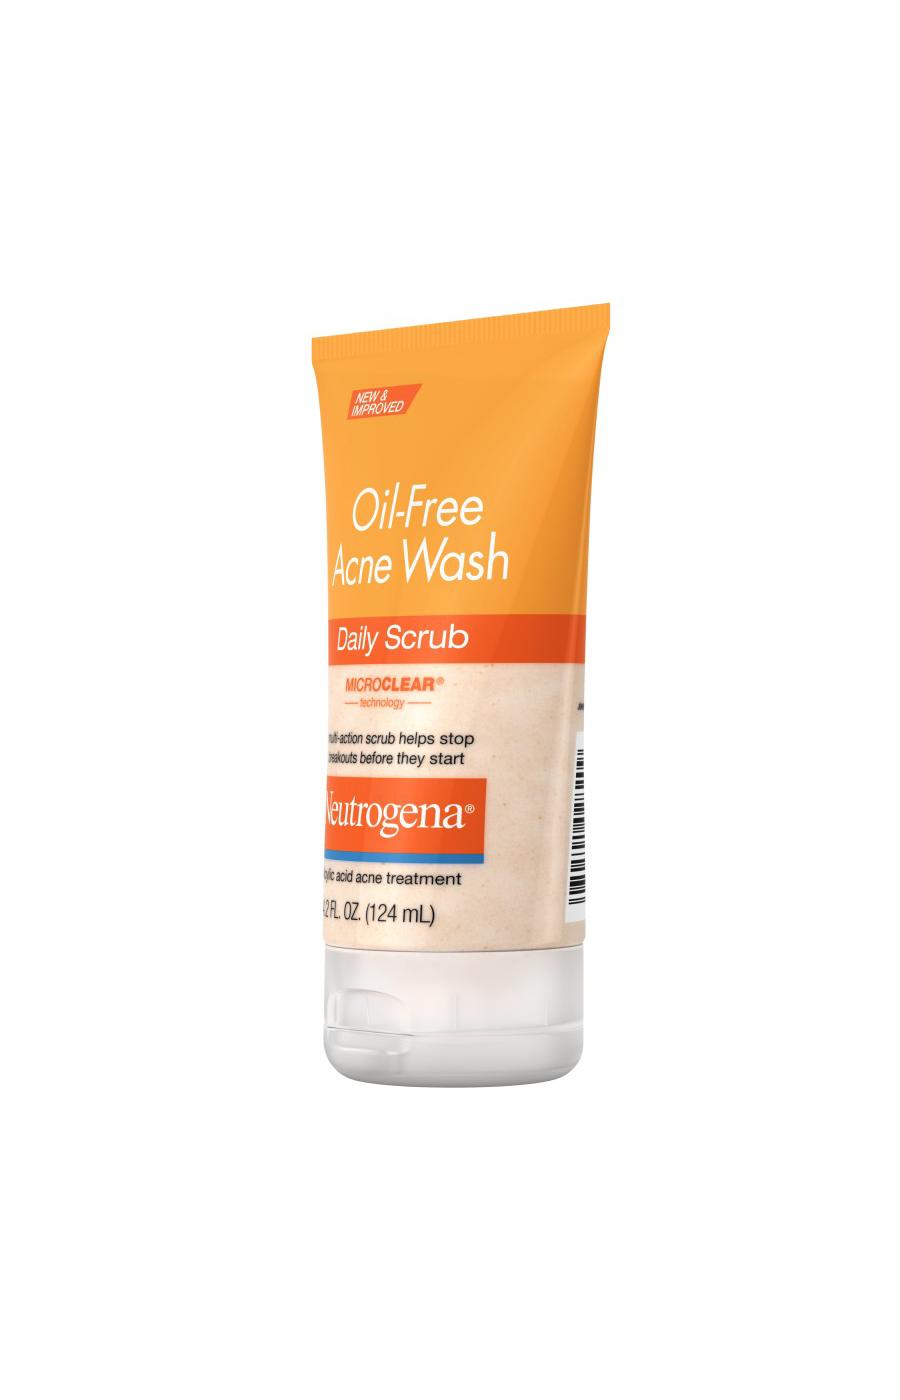 Neutrogena Oil-Free Acne Wash Daily Scrub; image 6 of 8